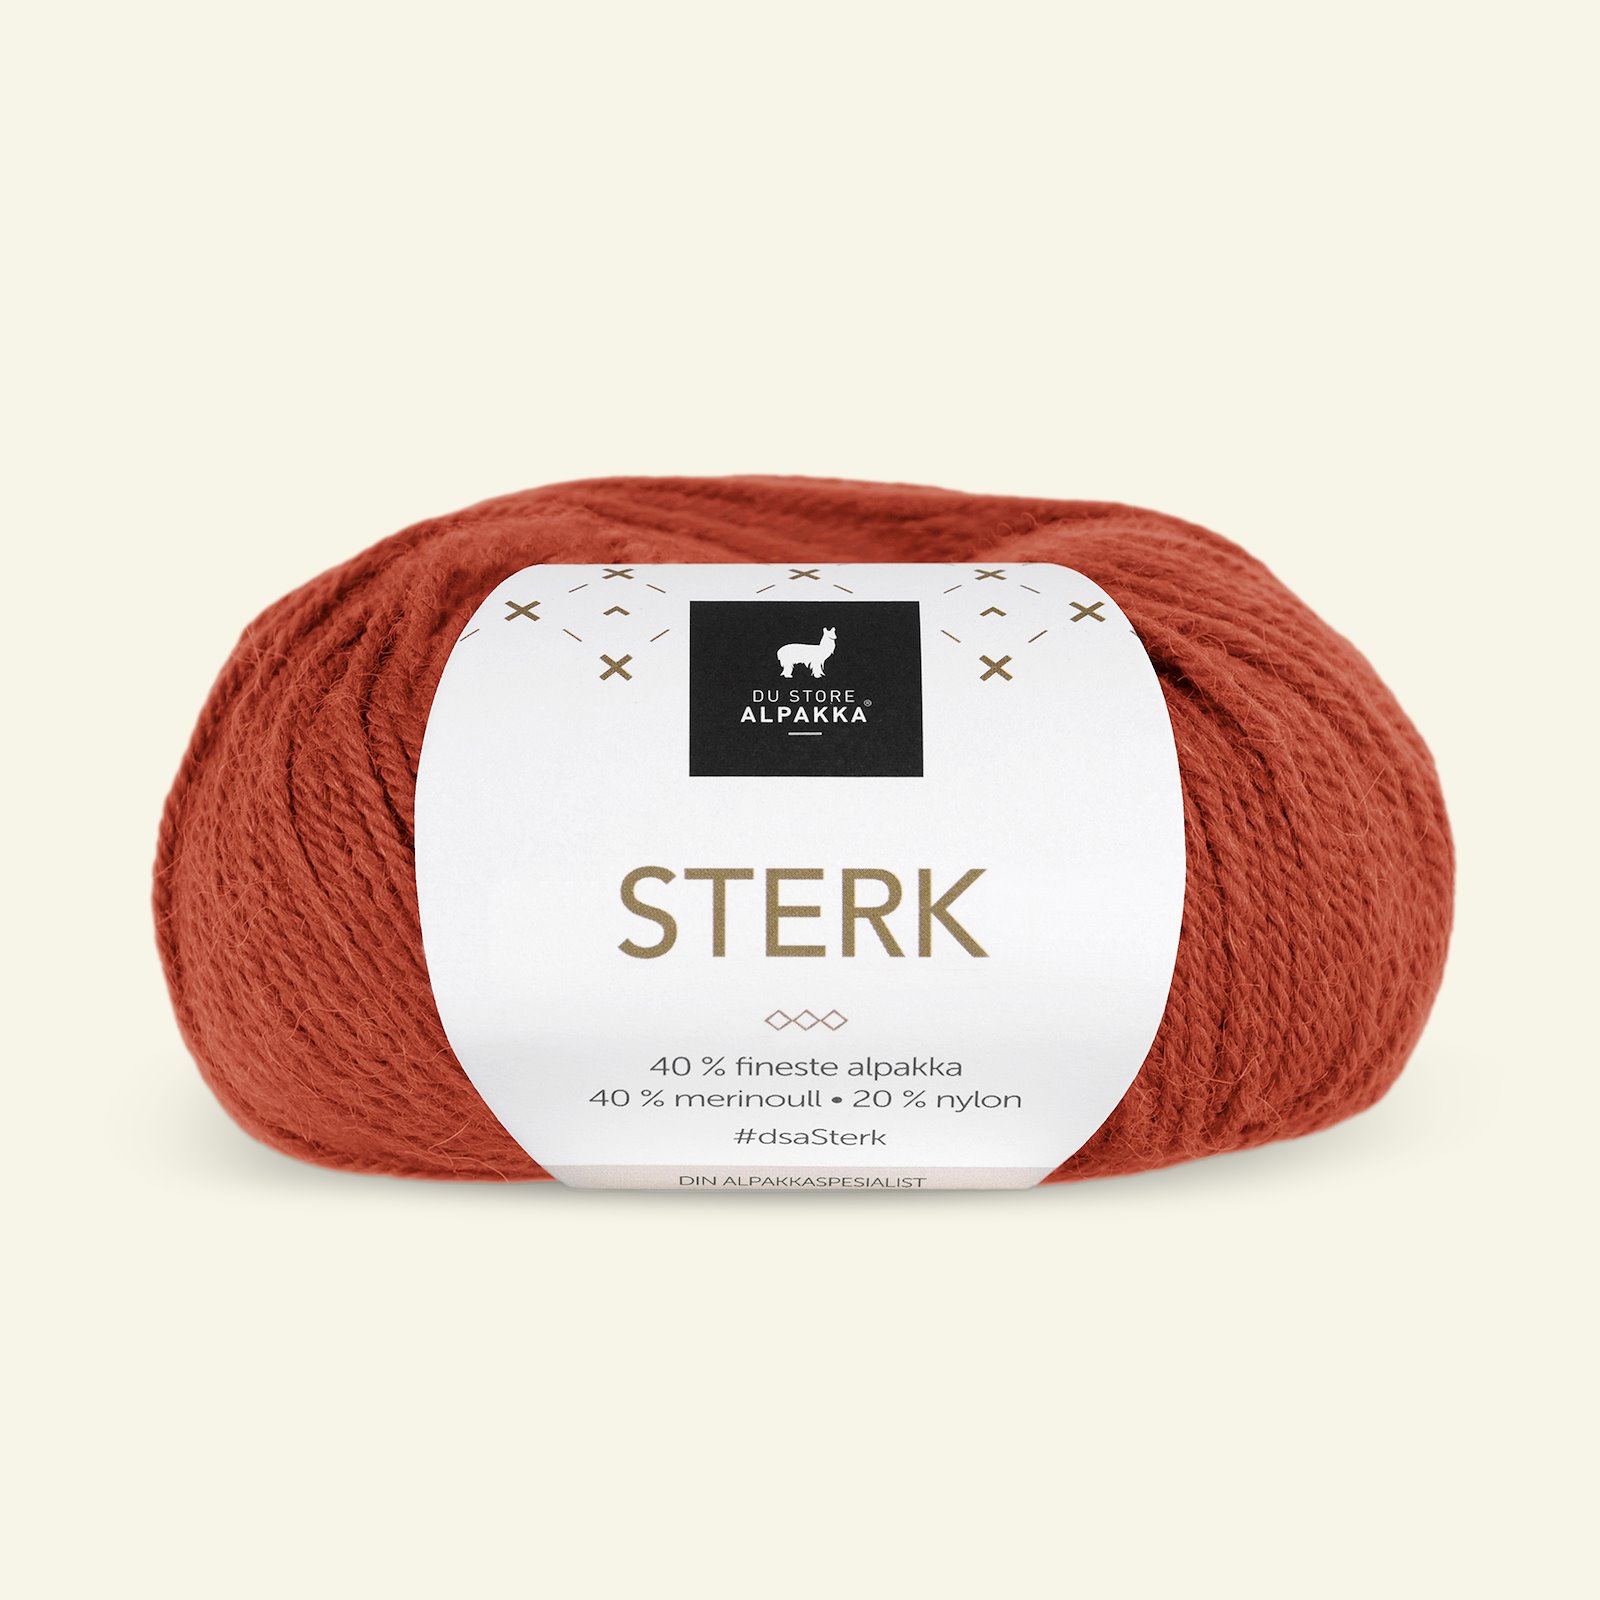 Du Store Alpakka, alpaca merino mixed yarn "Sterk", warm orange (842) 90000673_pack